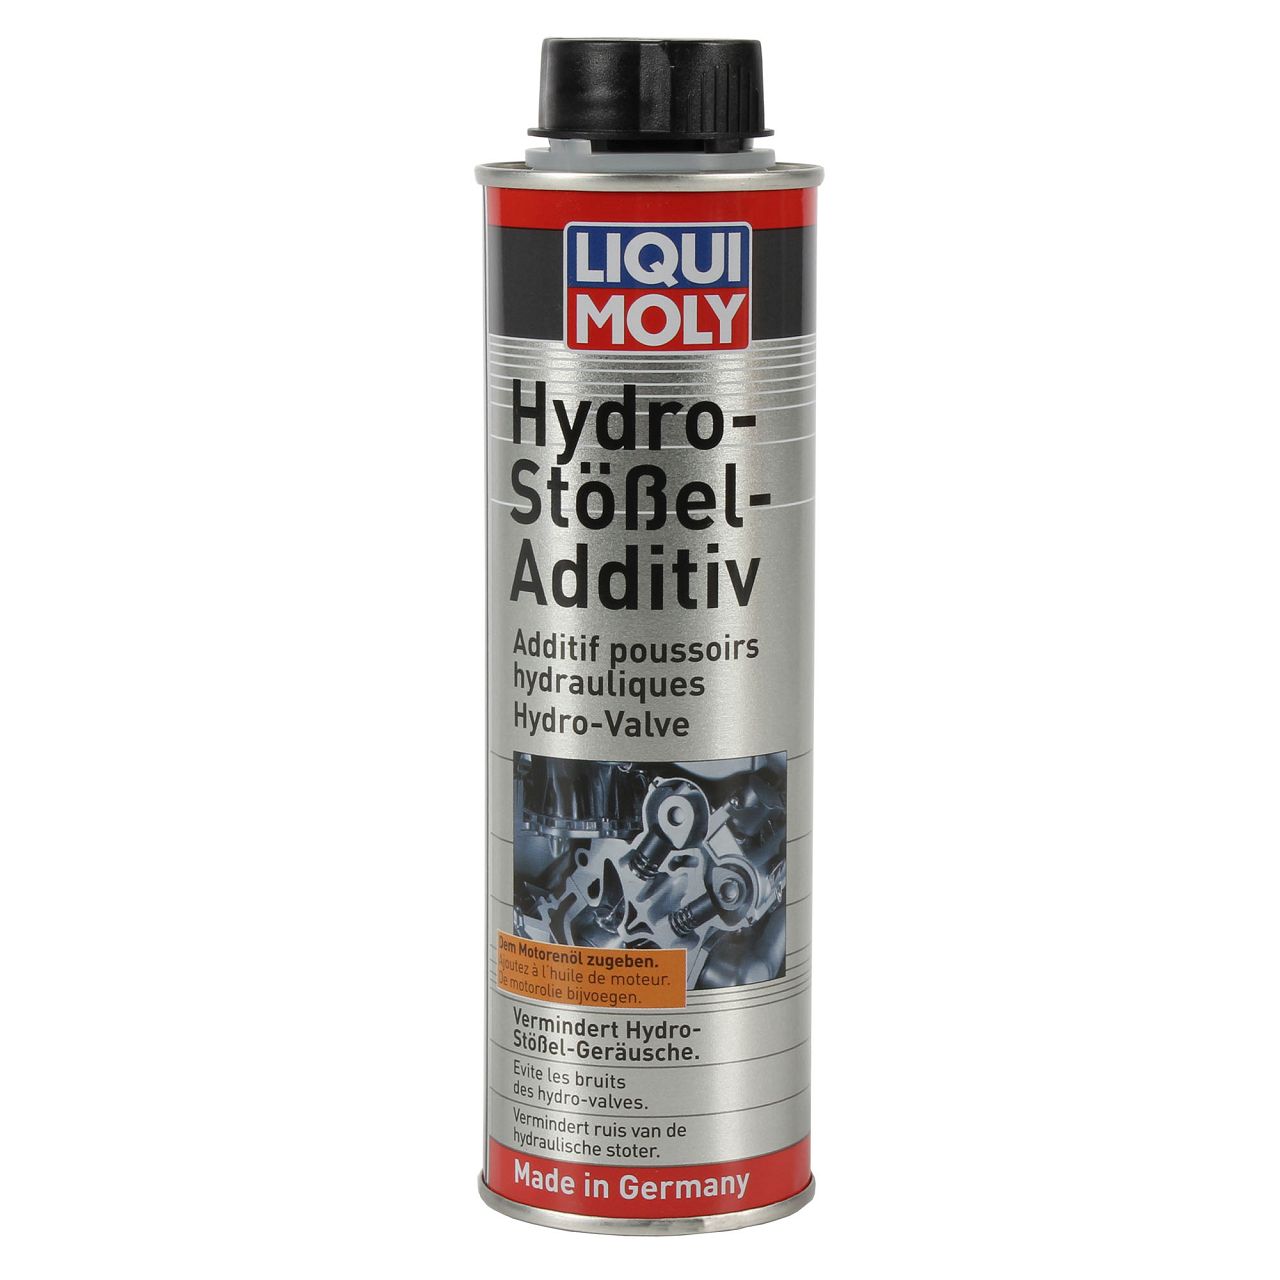 3x 300ml LIQUI MOLY 1009 Hydro-Stößel-Additiv Hydrostößel Reiniger Öl Additiv